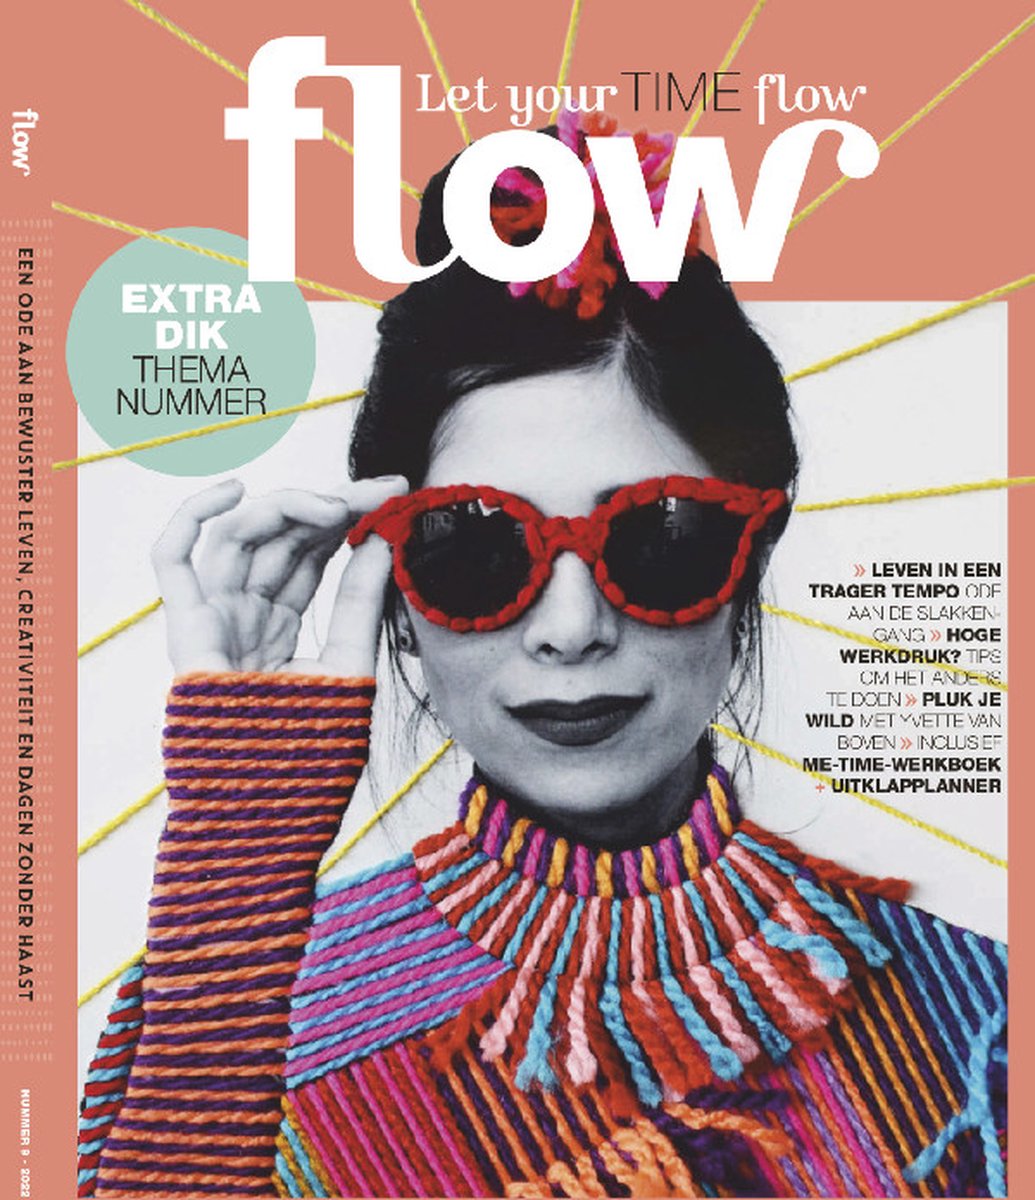 Flow Magazine 92022 Let your time FLOW